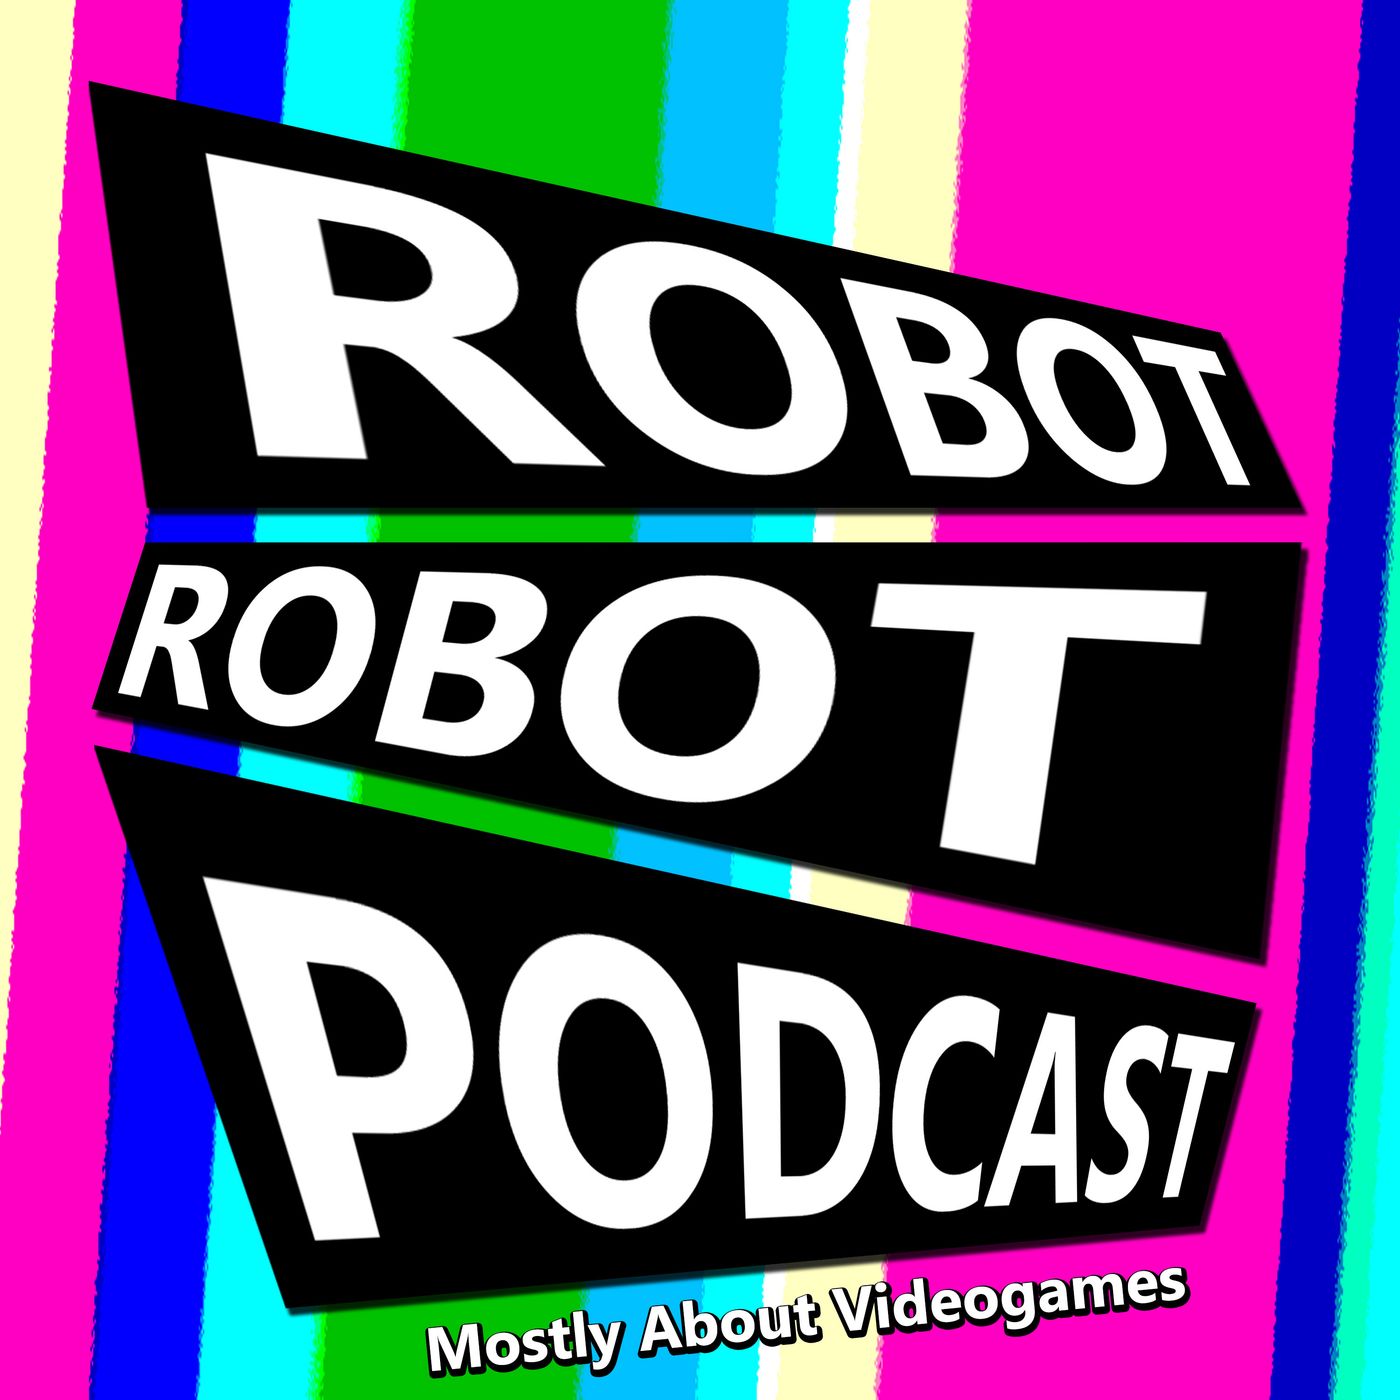 Robot Robot Podcast